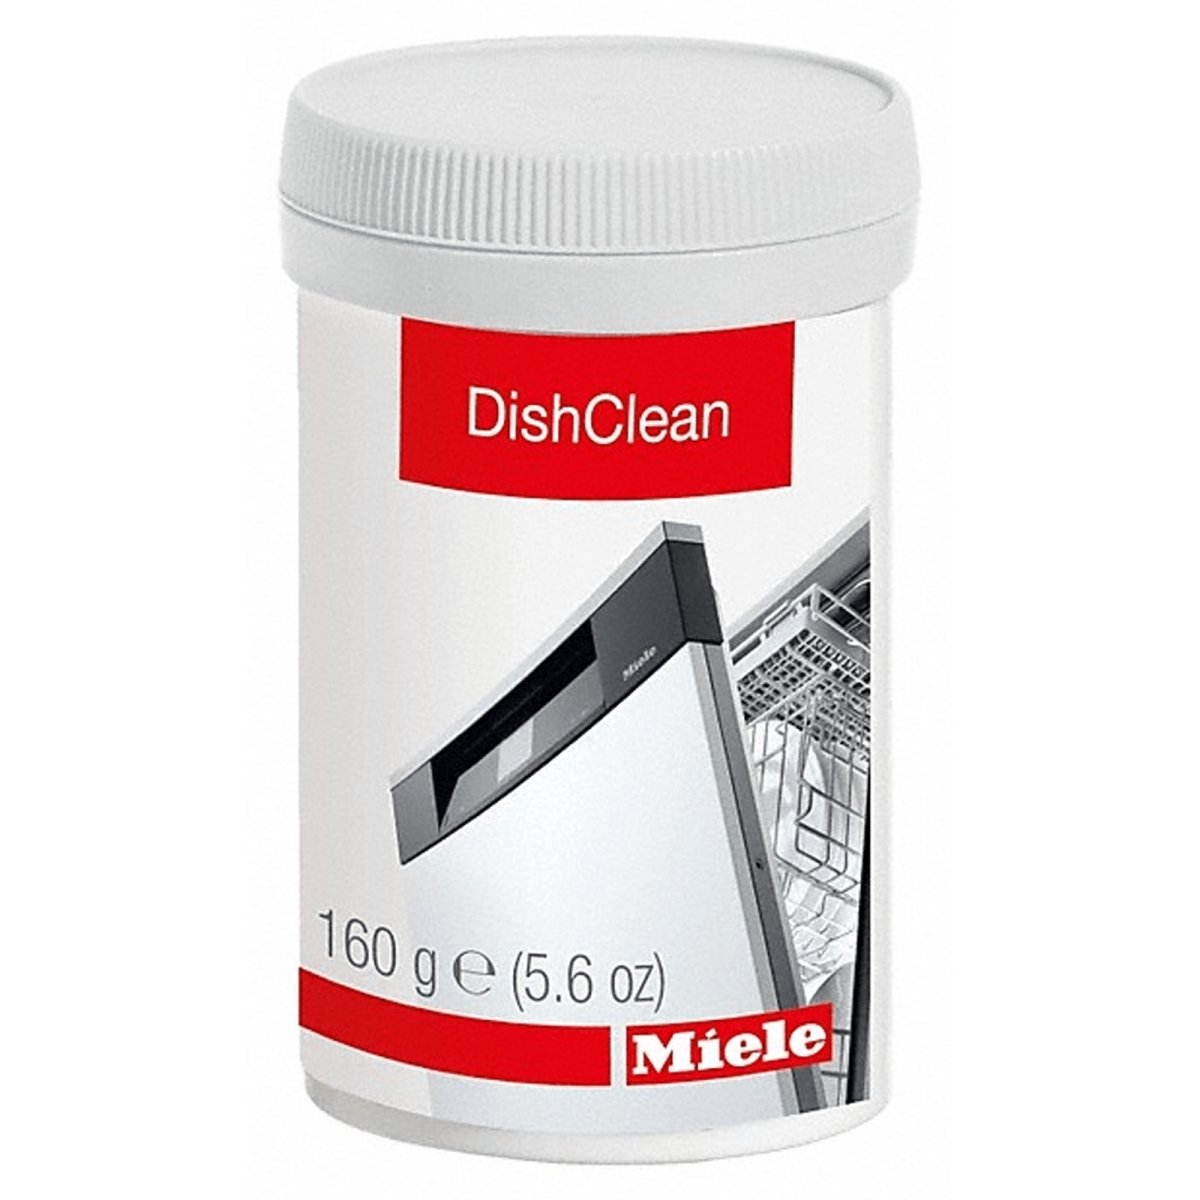 Miele 10161260 DishClean Dishwasher Cleaning Agent (160g) - Atlantic Electrics